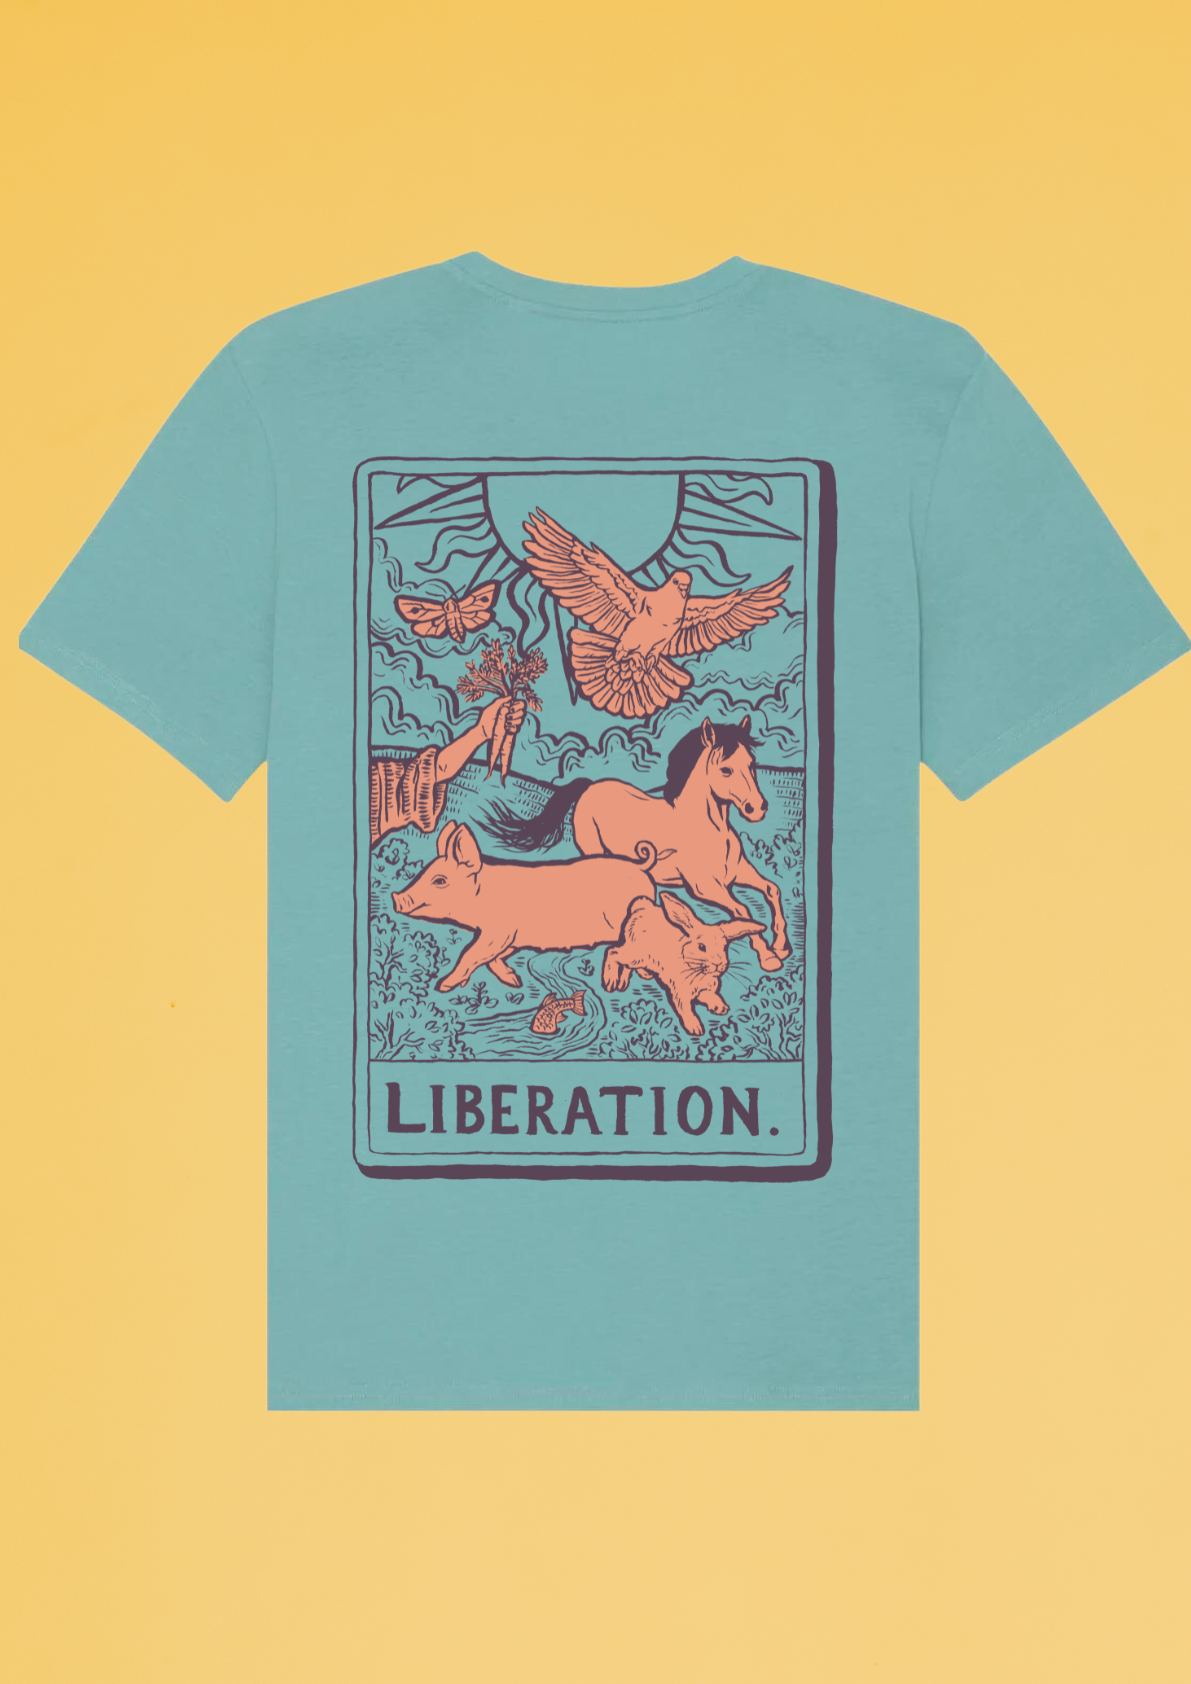 Animal Lover Tarot T-Shirt